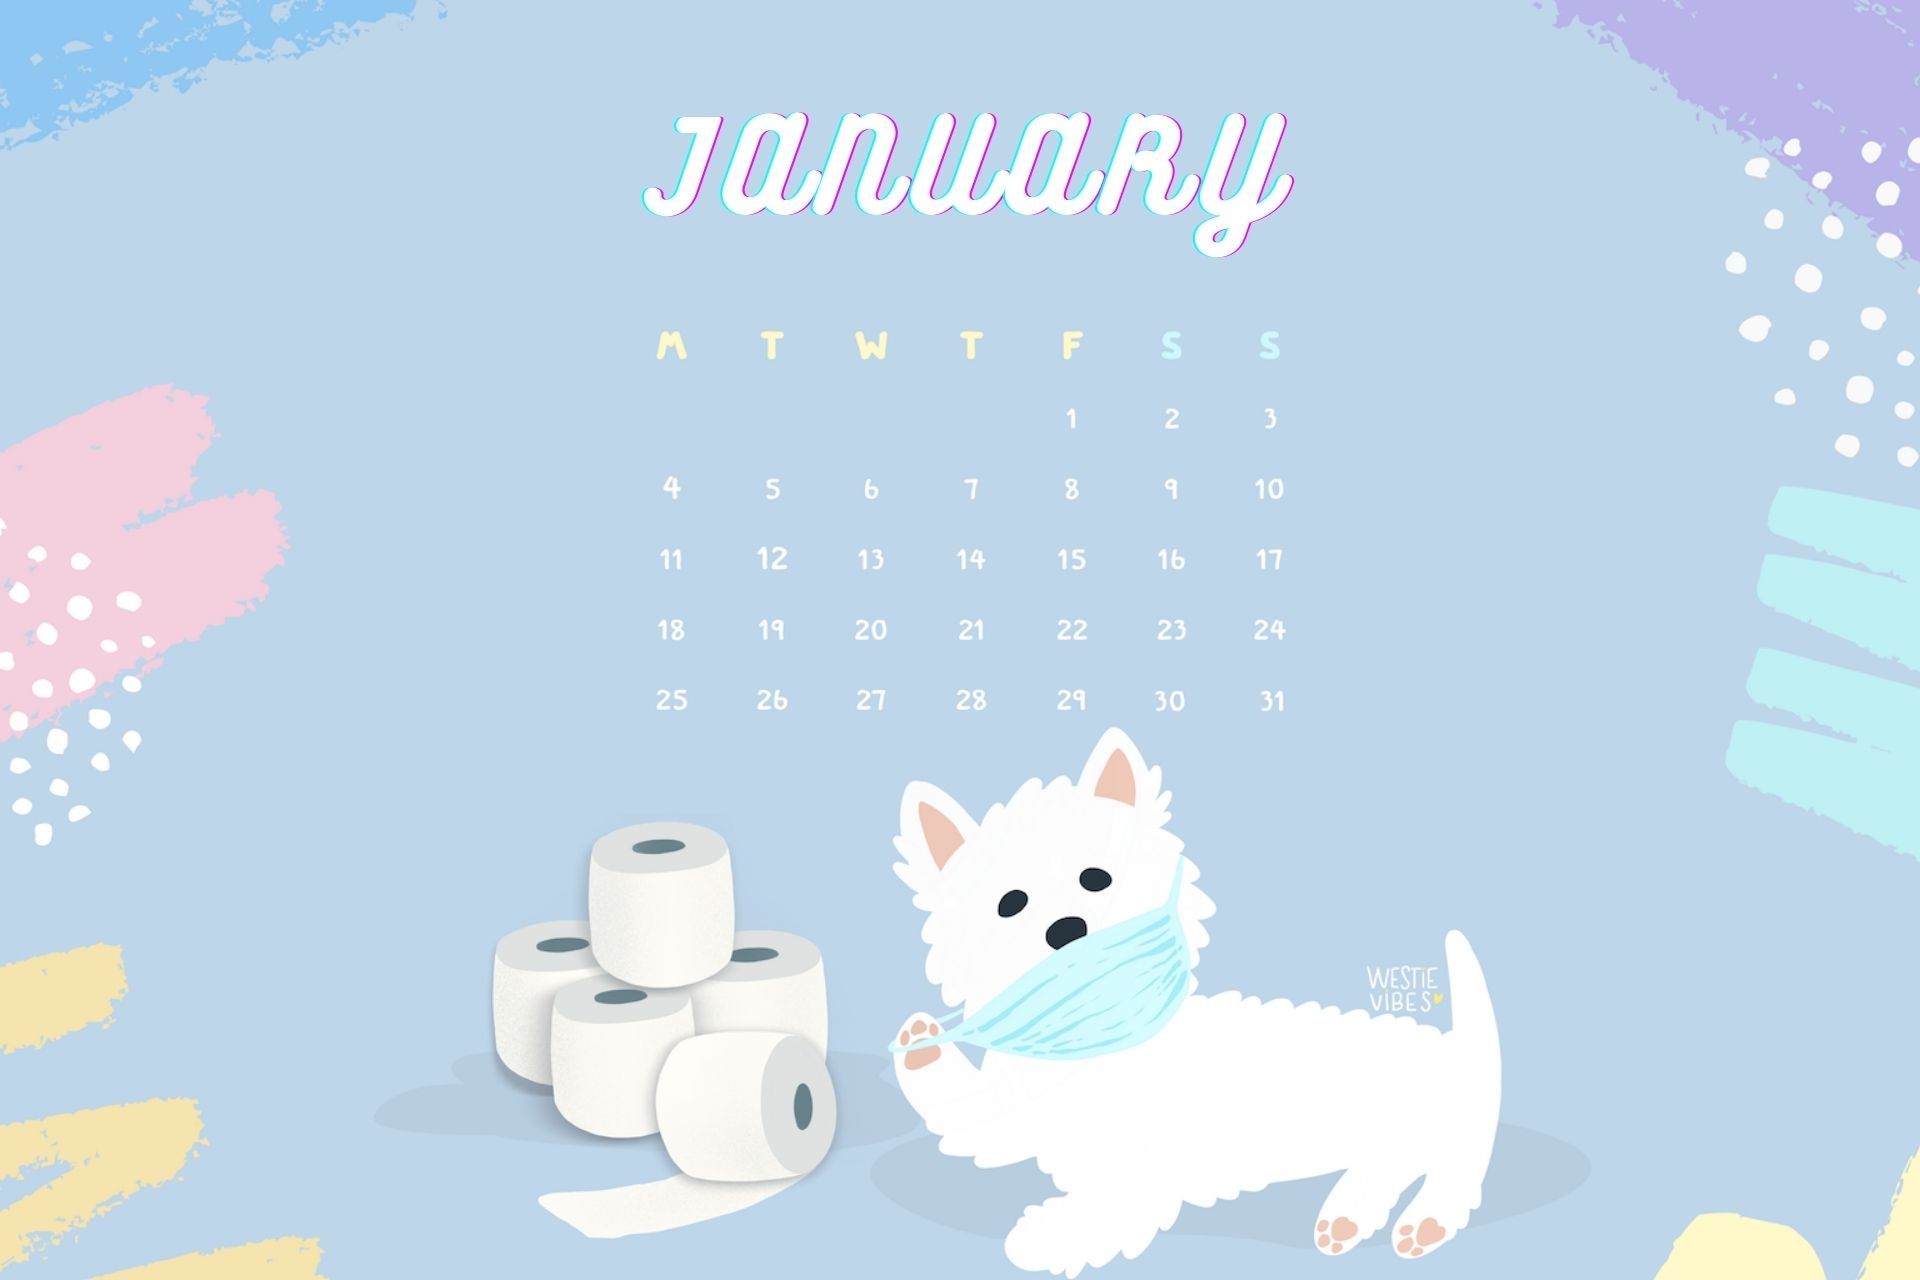 January 2021 Wallpaper For Desktop Image ID 3